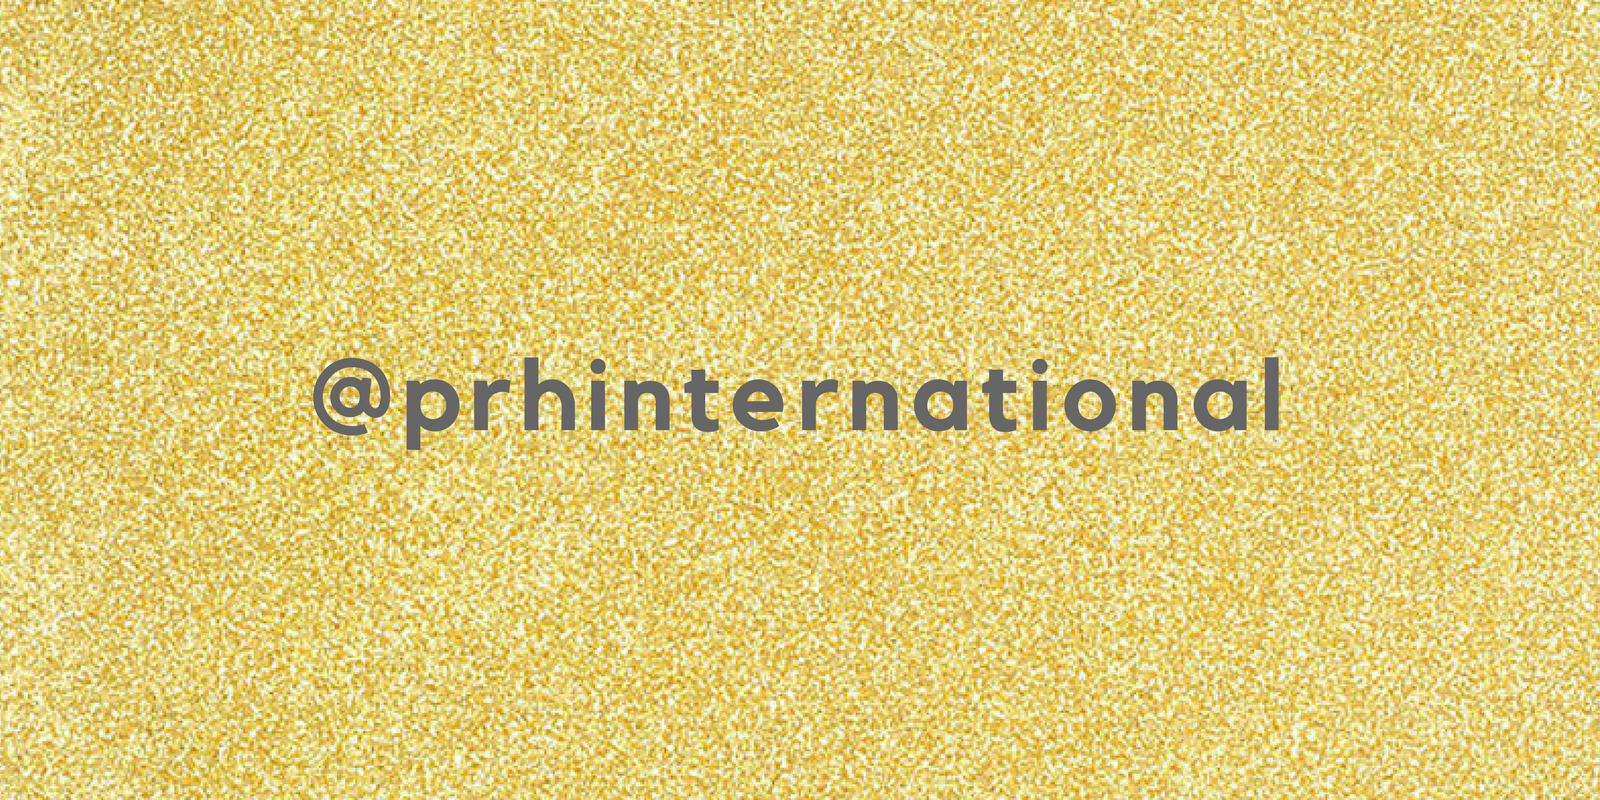 PRH International is officially on Instagram!